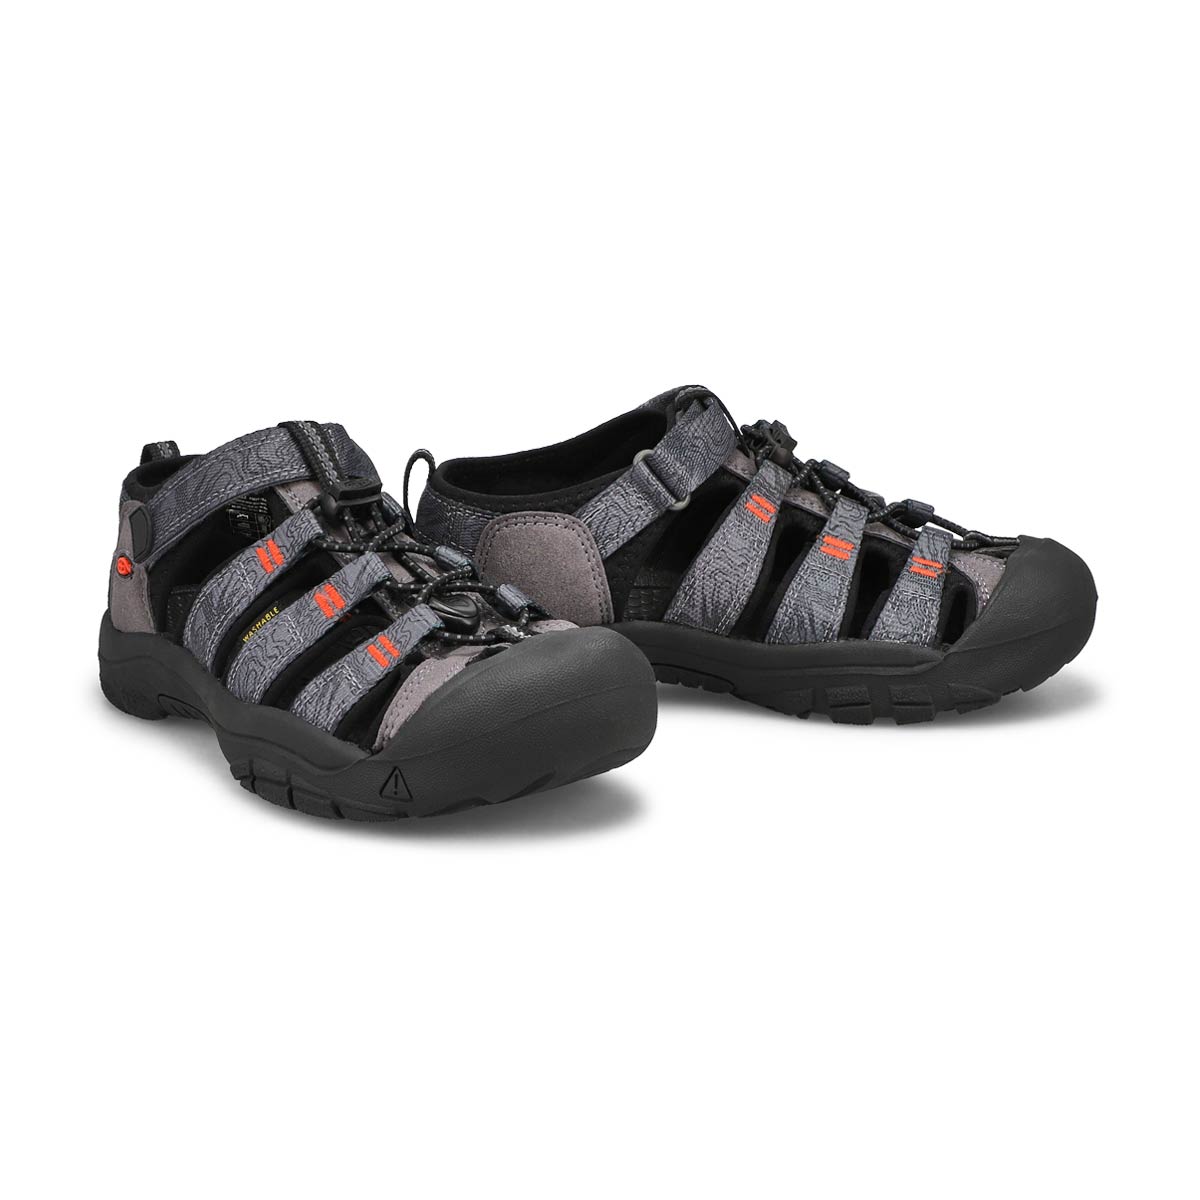 Boys' Newport H2 Sandal - Steel Grey/Black